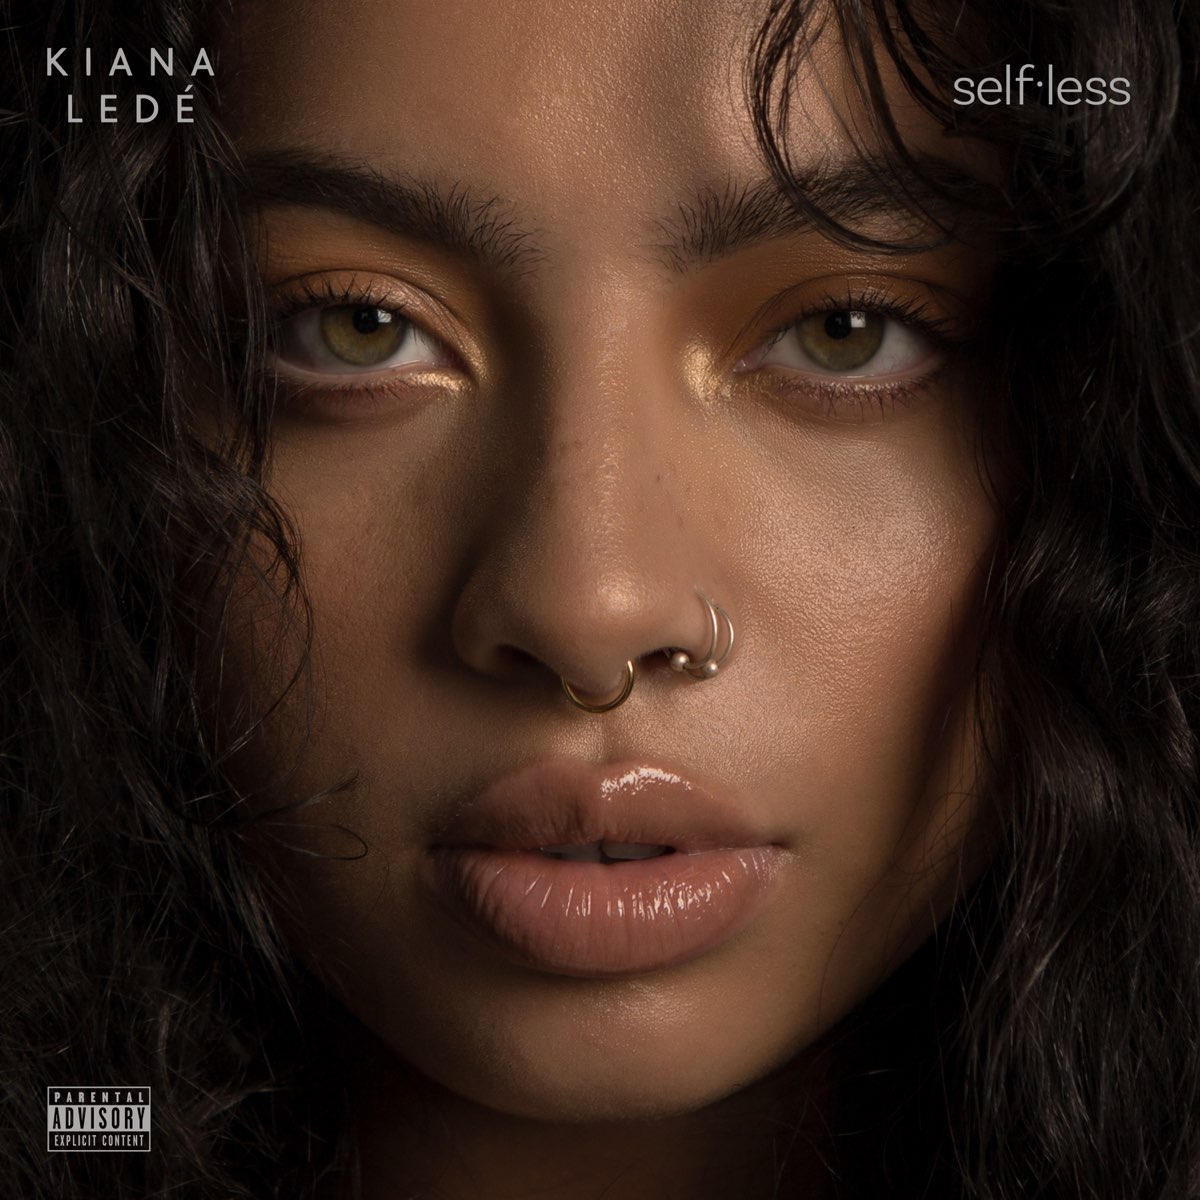 ‎Selfless - Album by Kiana Ledé - Apple Music